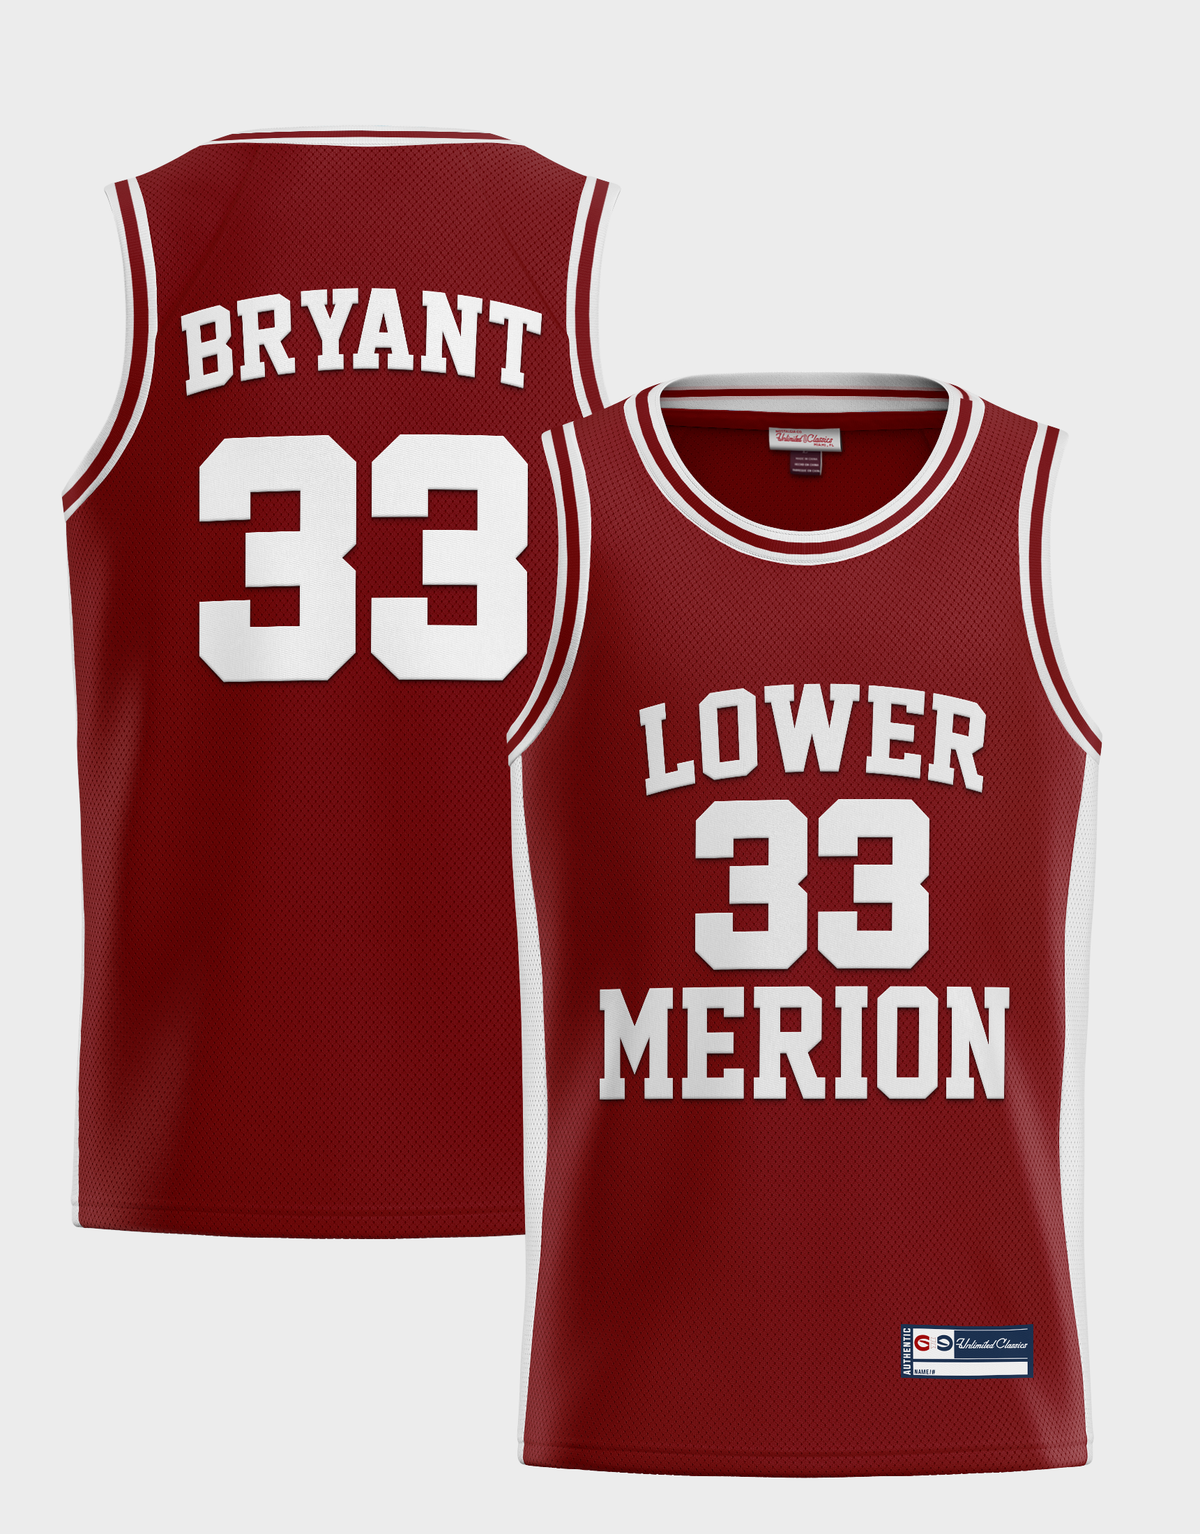 YOUTH Kobe Bryant #33 Lower Merion Basketball Jersey